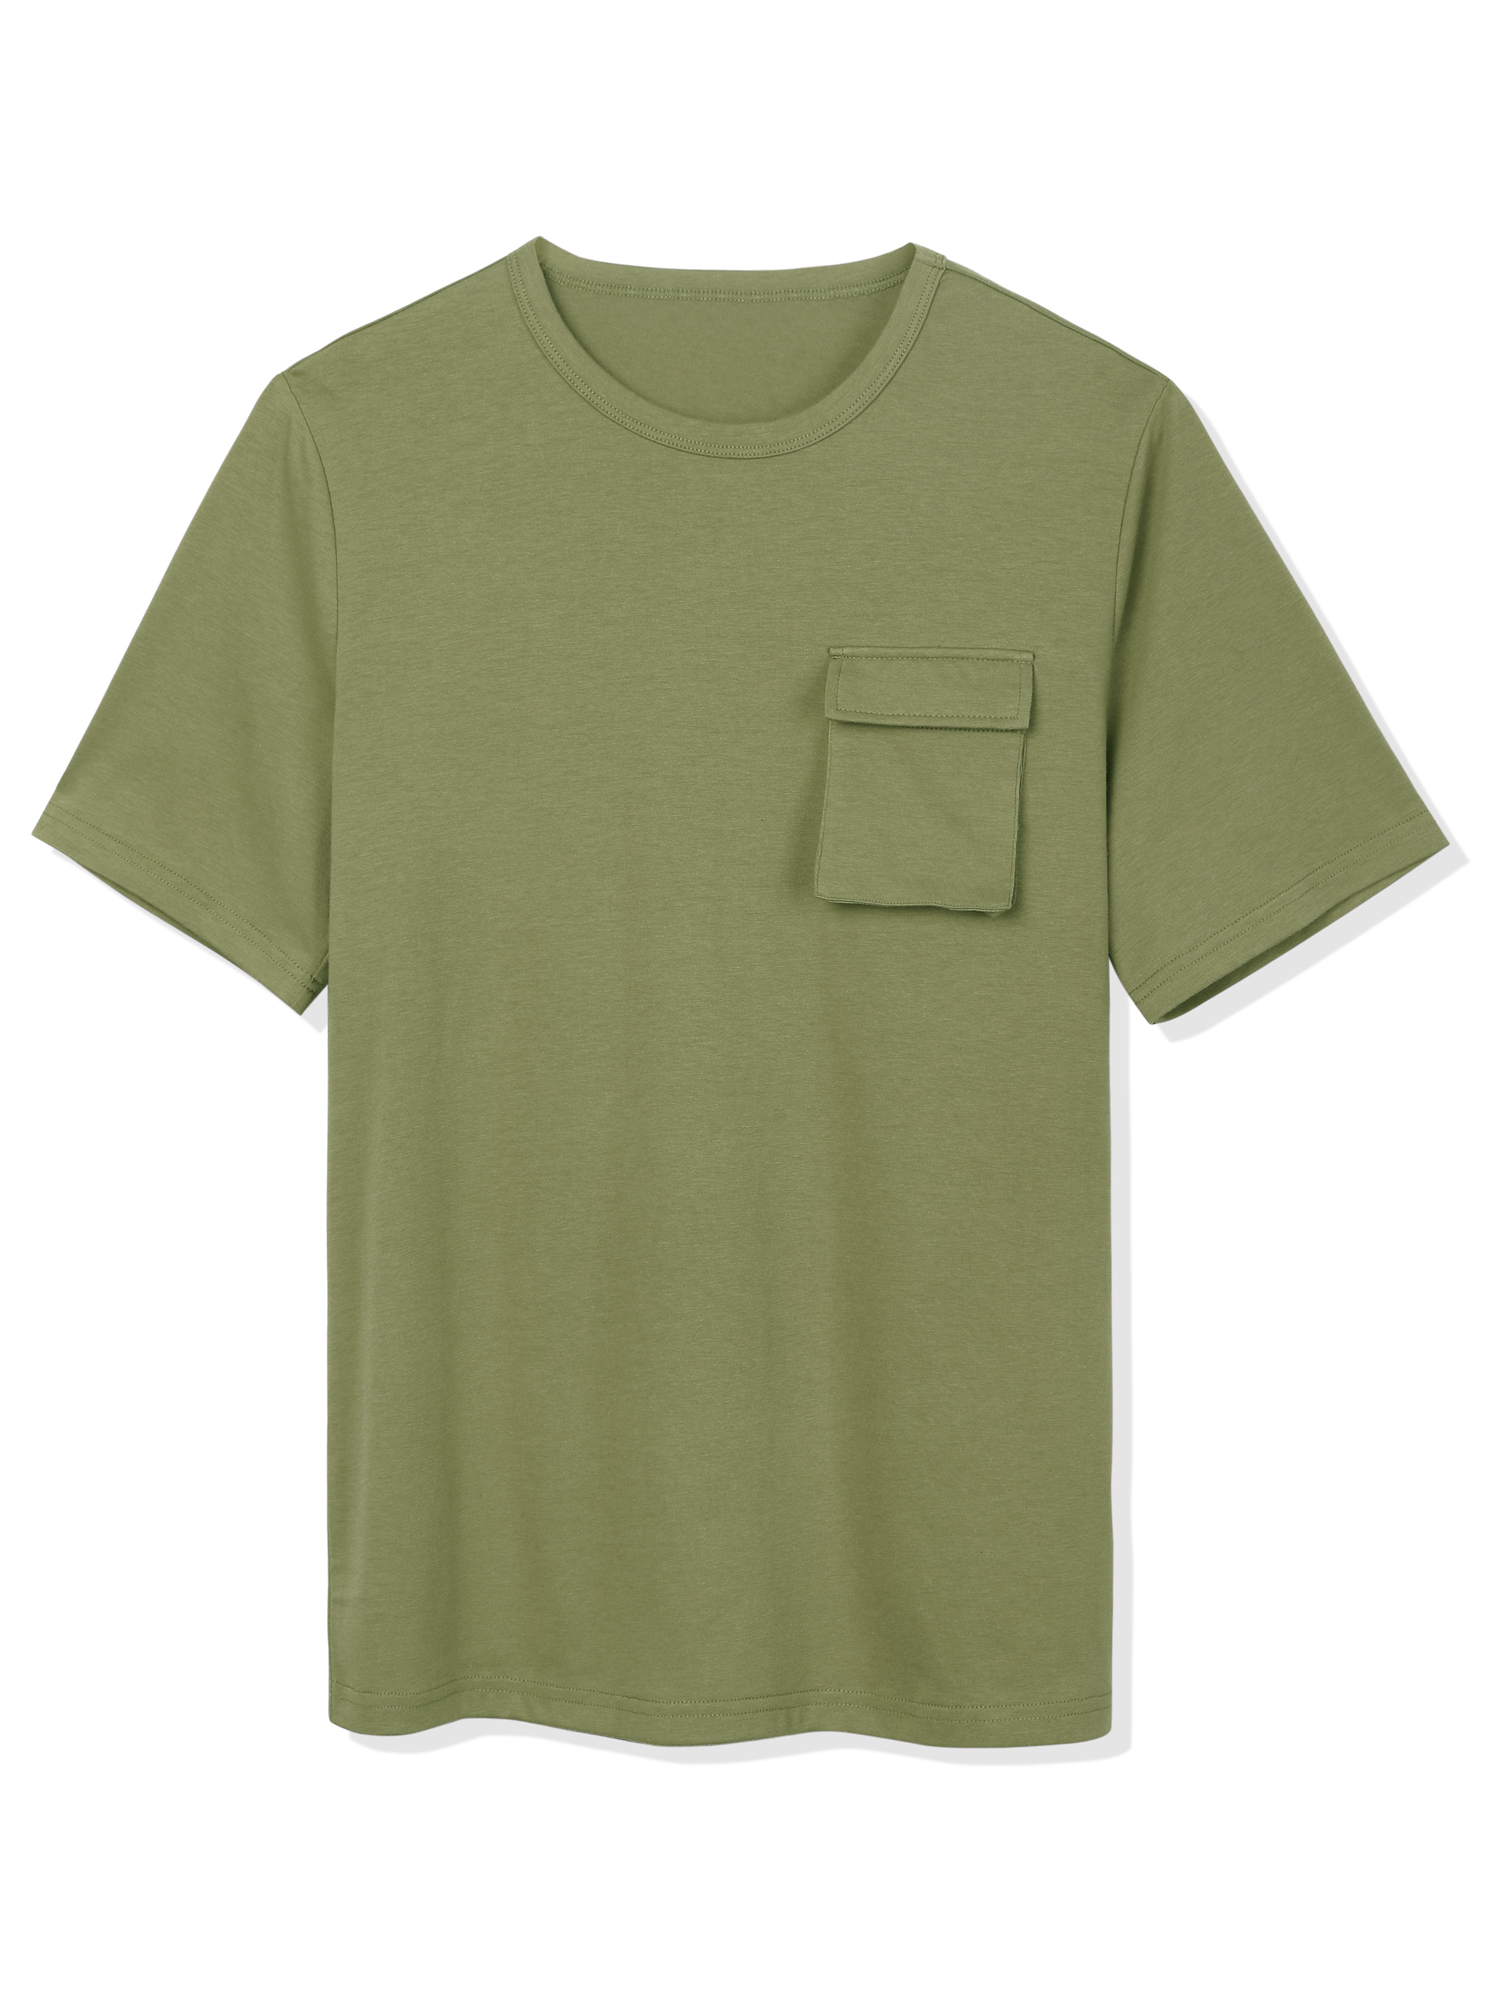 MODA NOVA Big & Tall Men's Crew Neck Short Sleeve Classic Cargo Pocket T-shirts - image 1 of 5